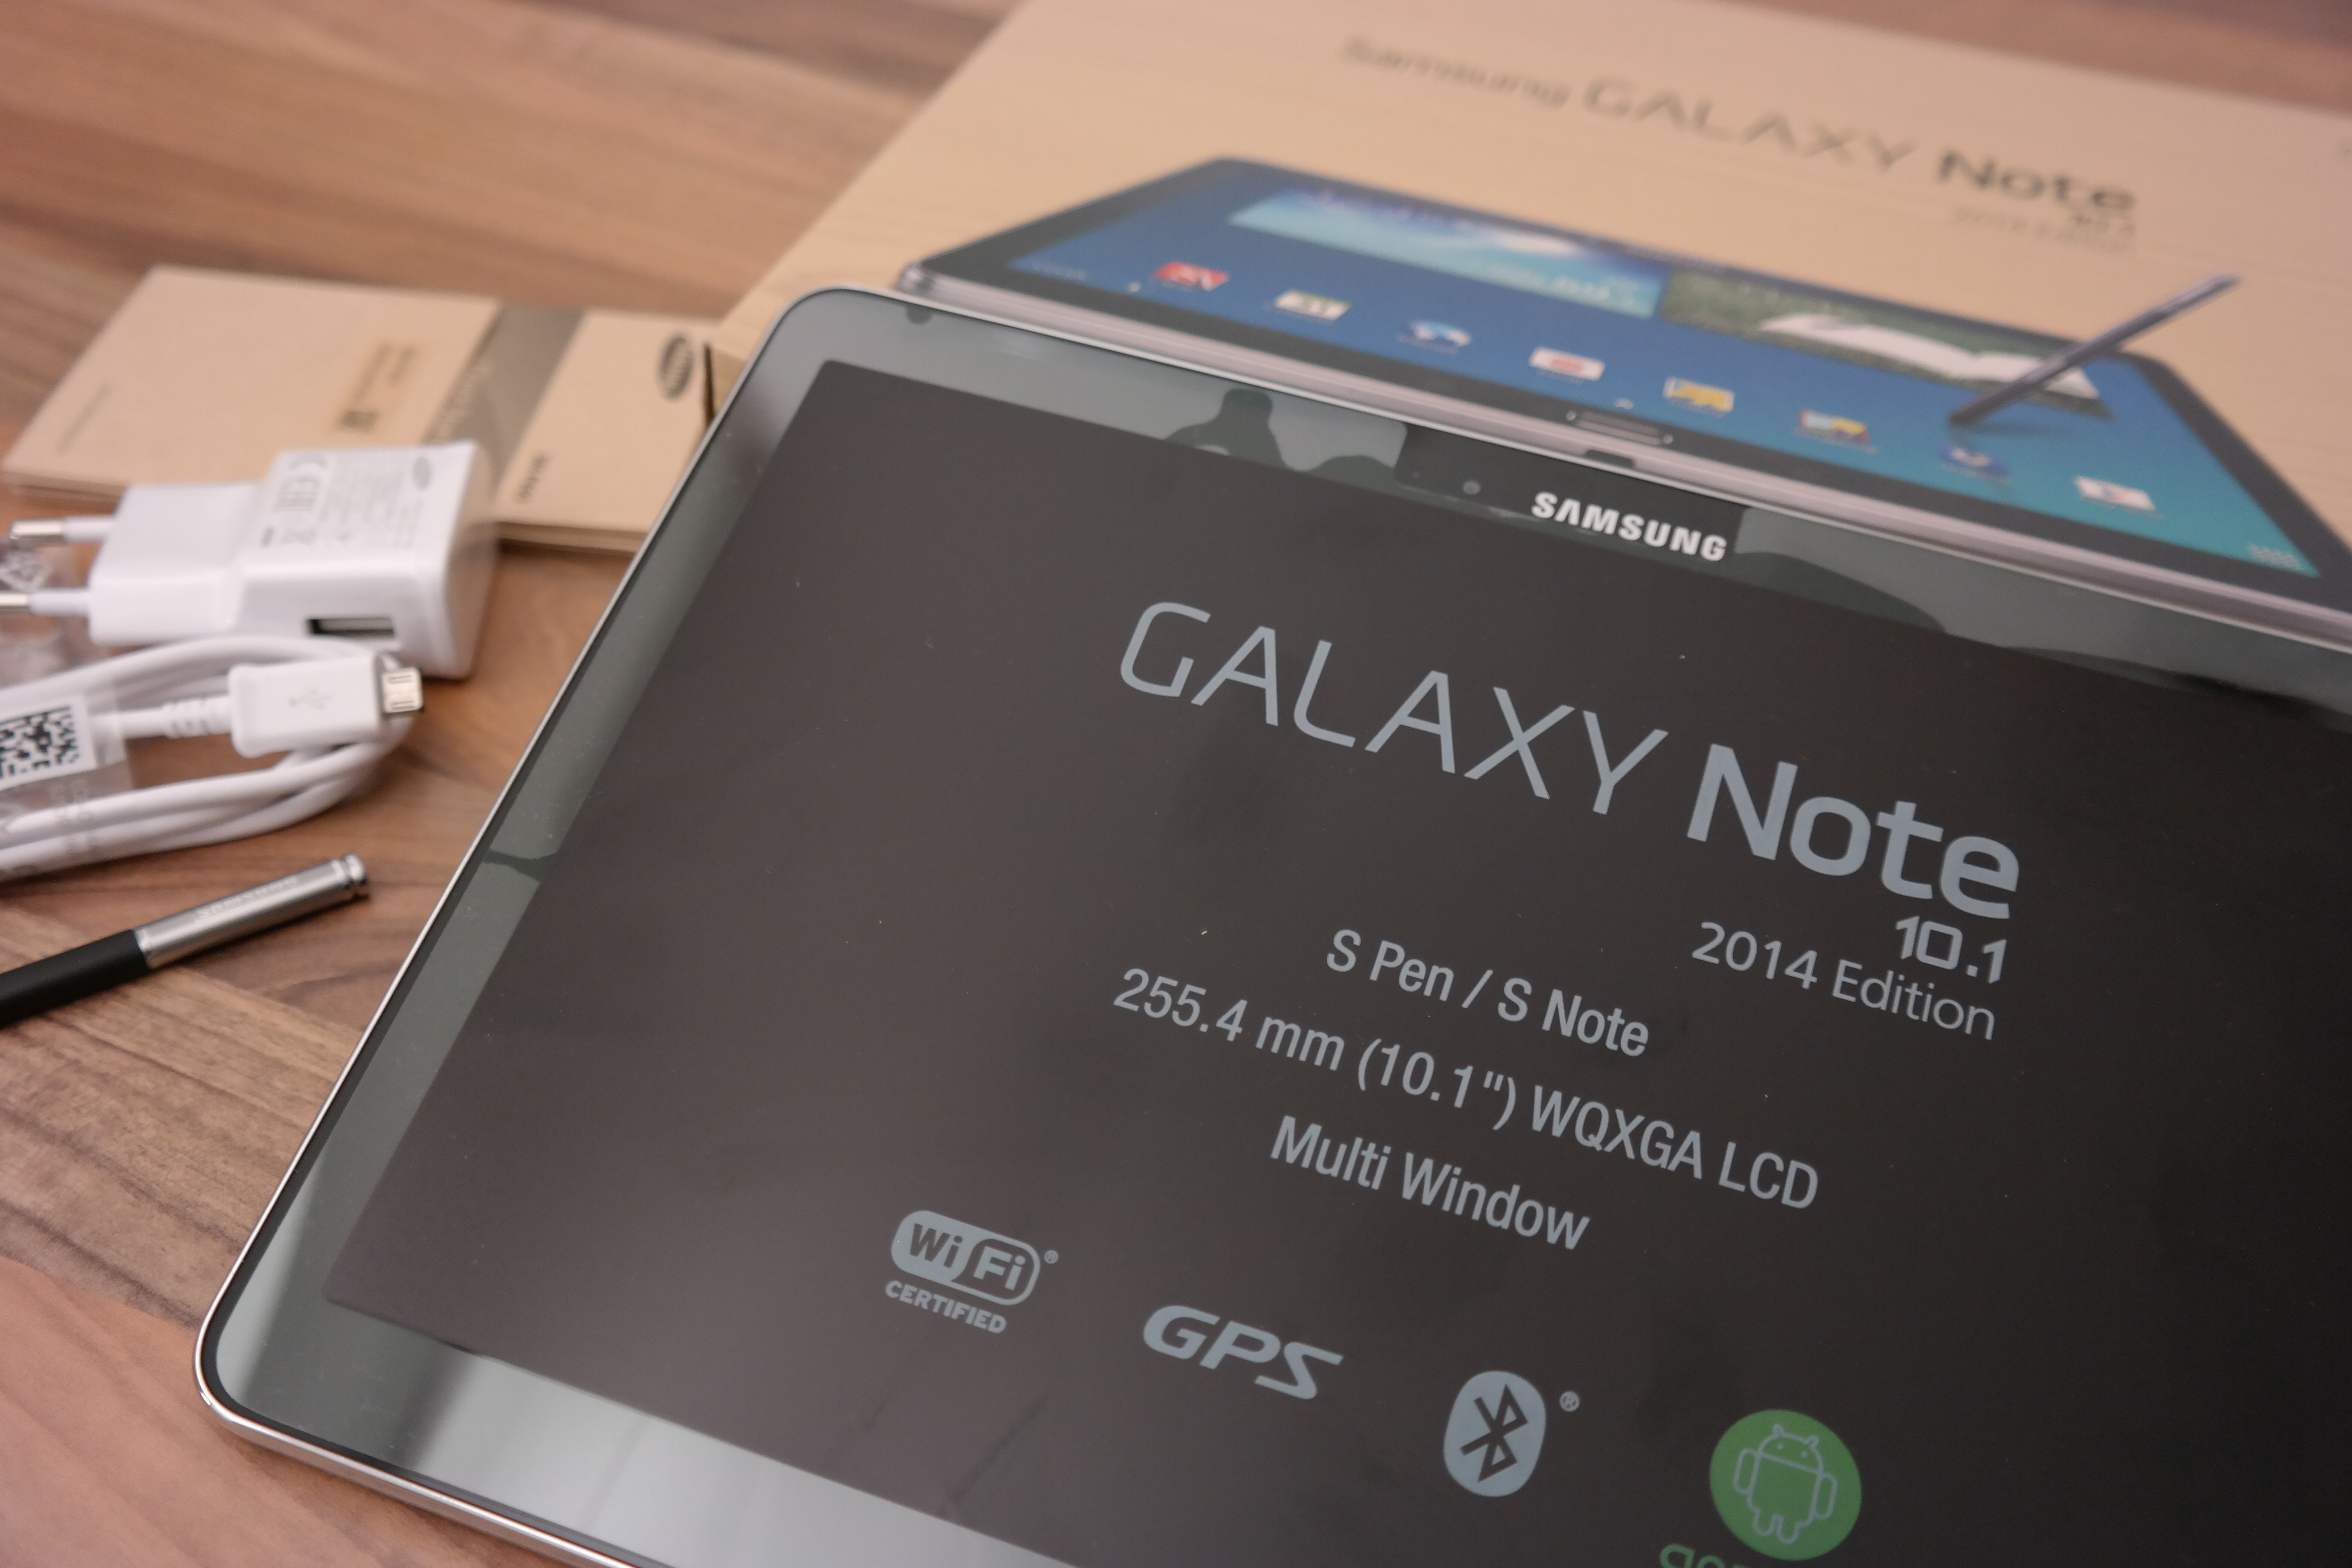 Galaxy note edition. Samsung Galaxy Note 10.1 2014 Edition. Samsung Galaxy Note 10.1 2014 Edition коробка. Galaxy Note 2014. Самсунг галакси ноут эдишн 2014.